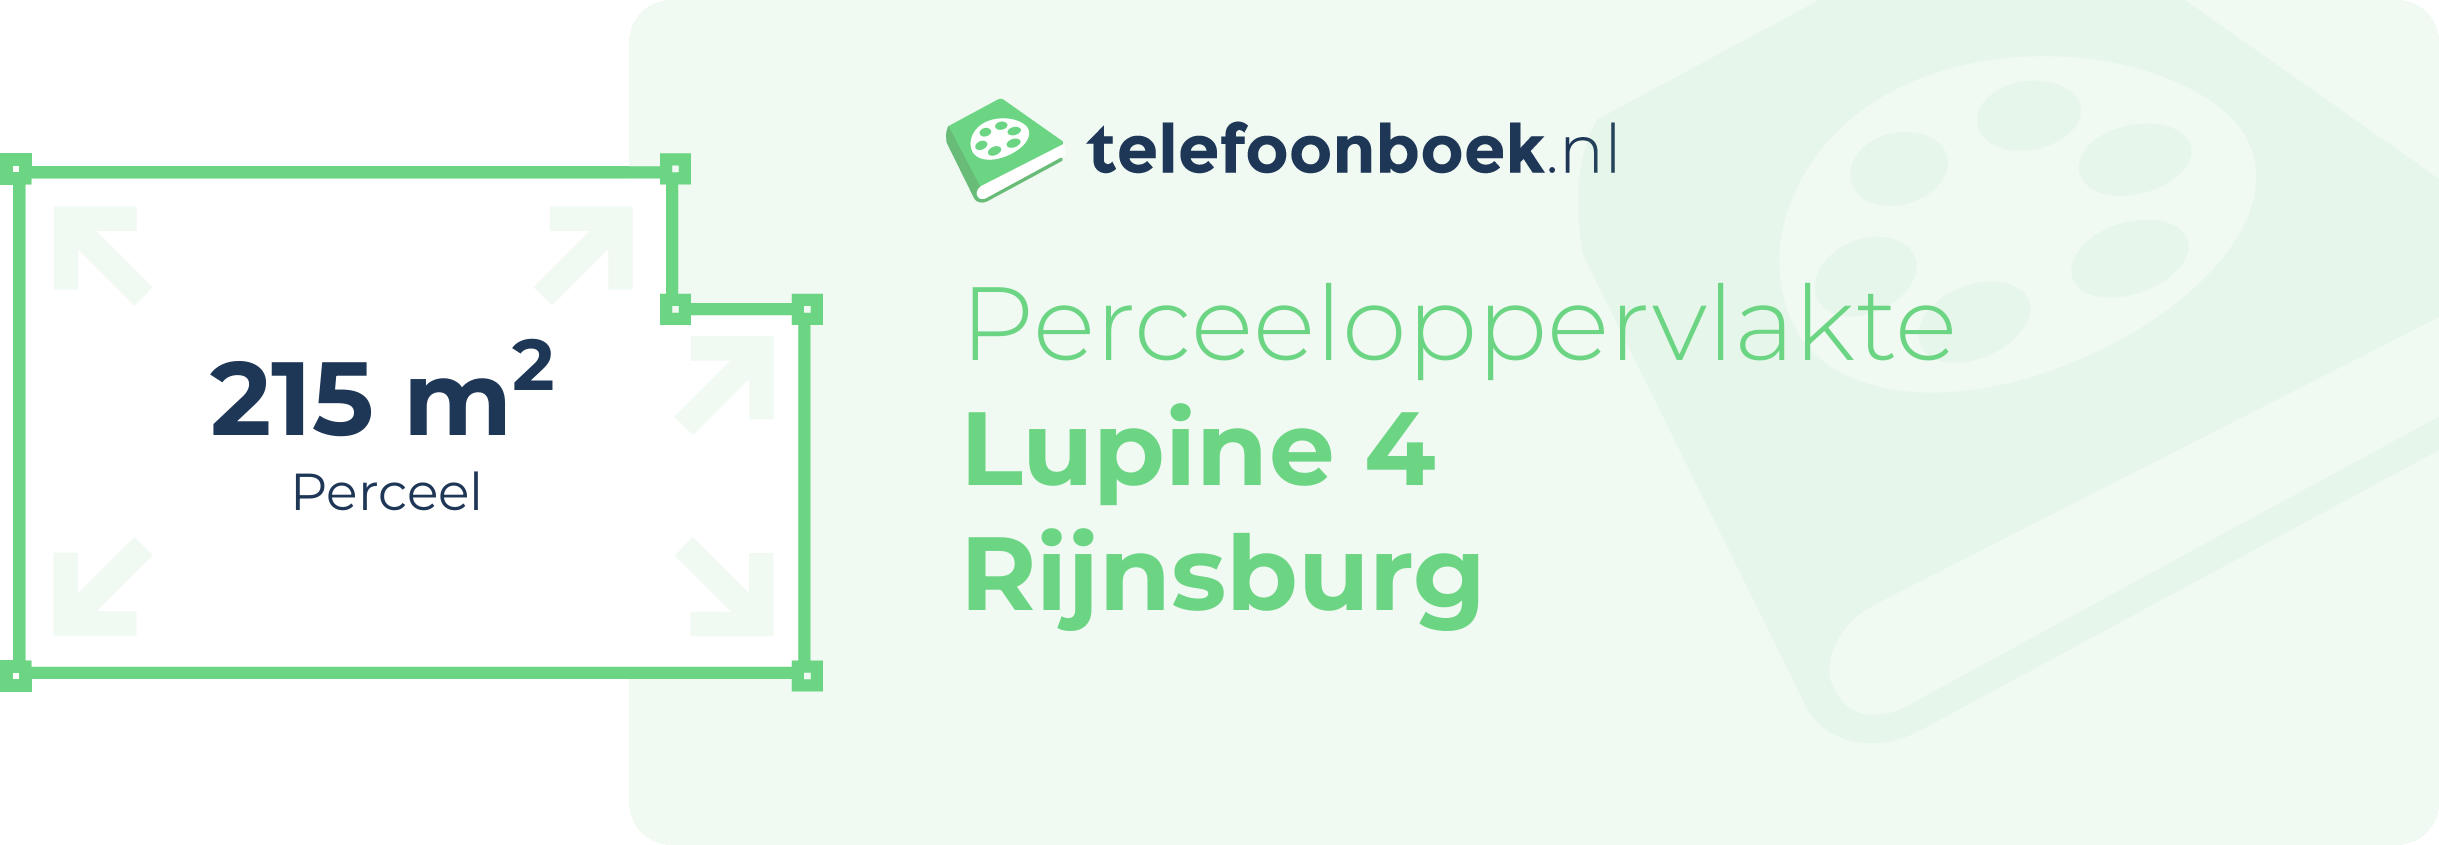 Perceeloppervlakte Lupine 4 Rijnsburg